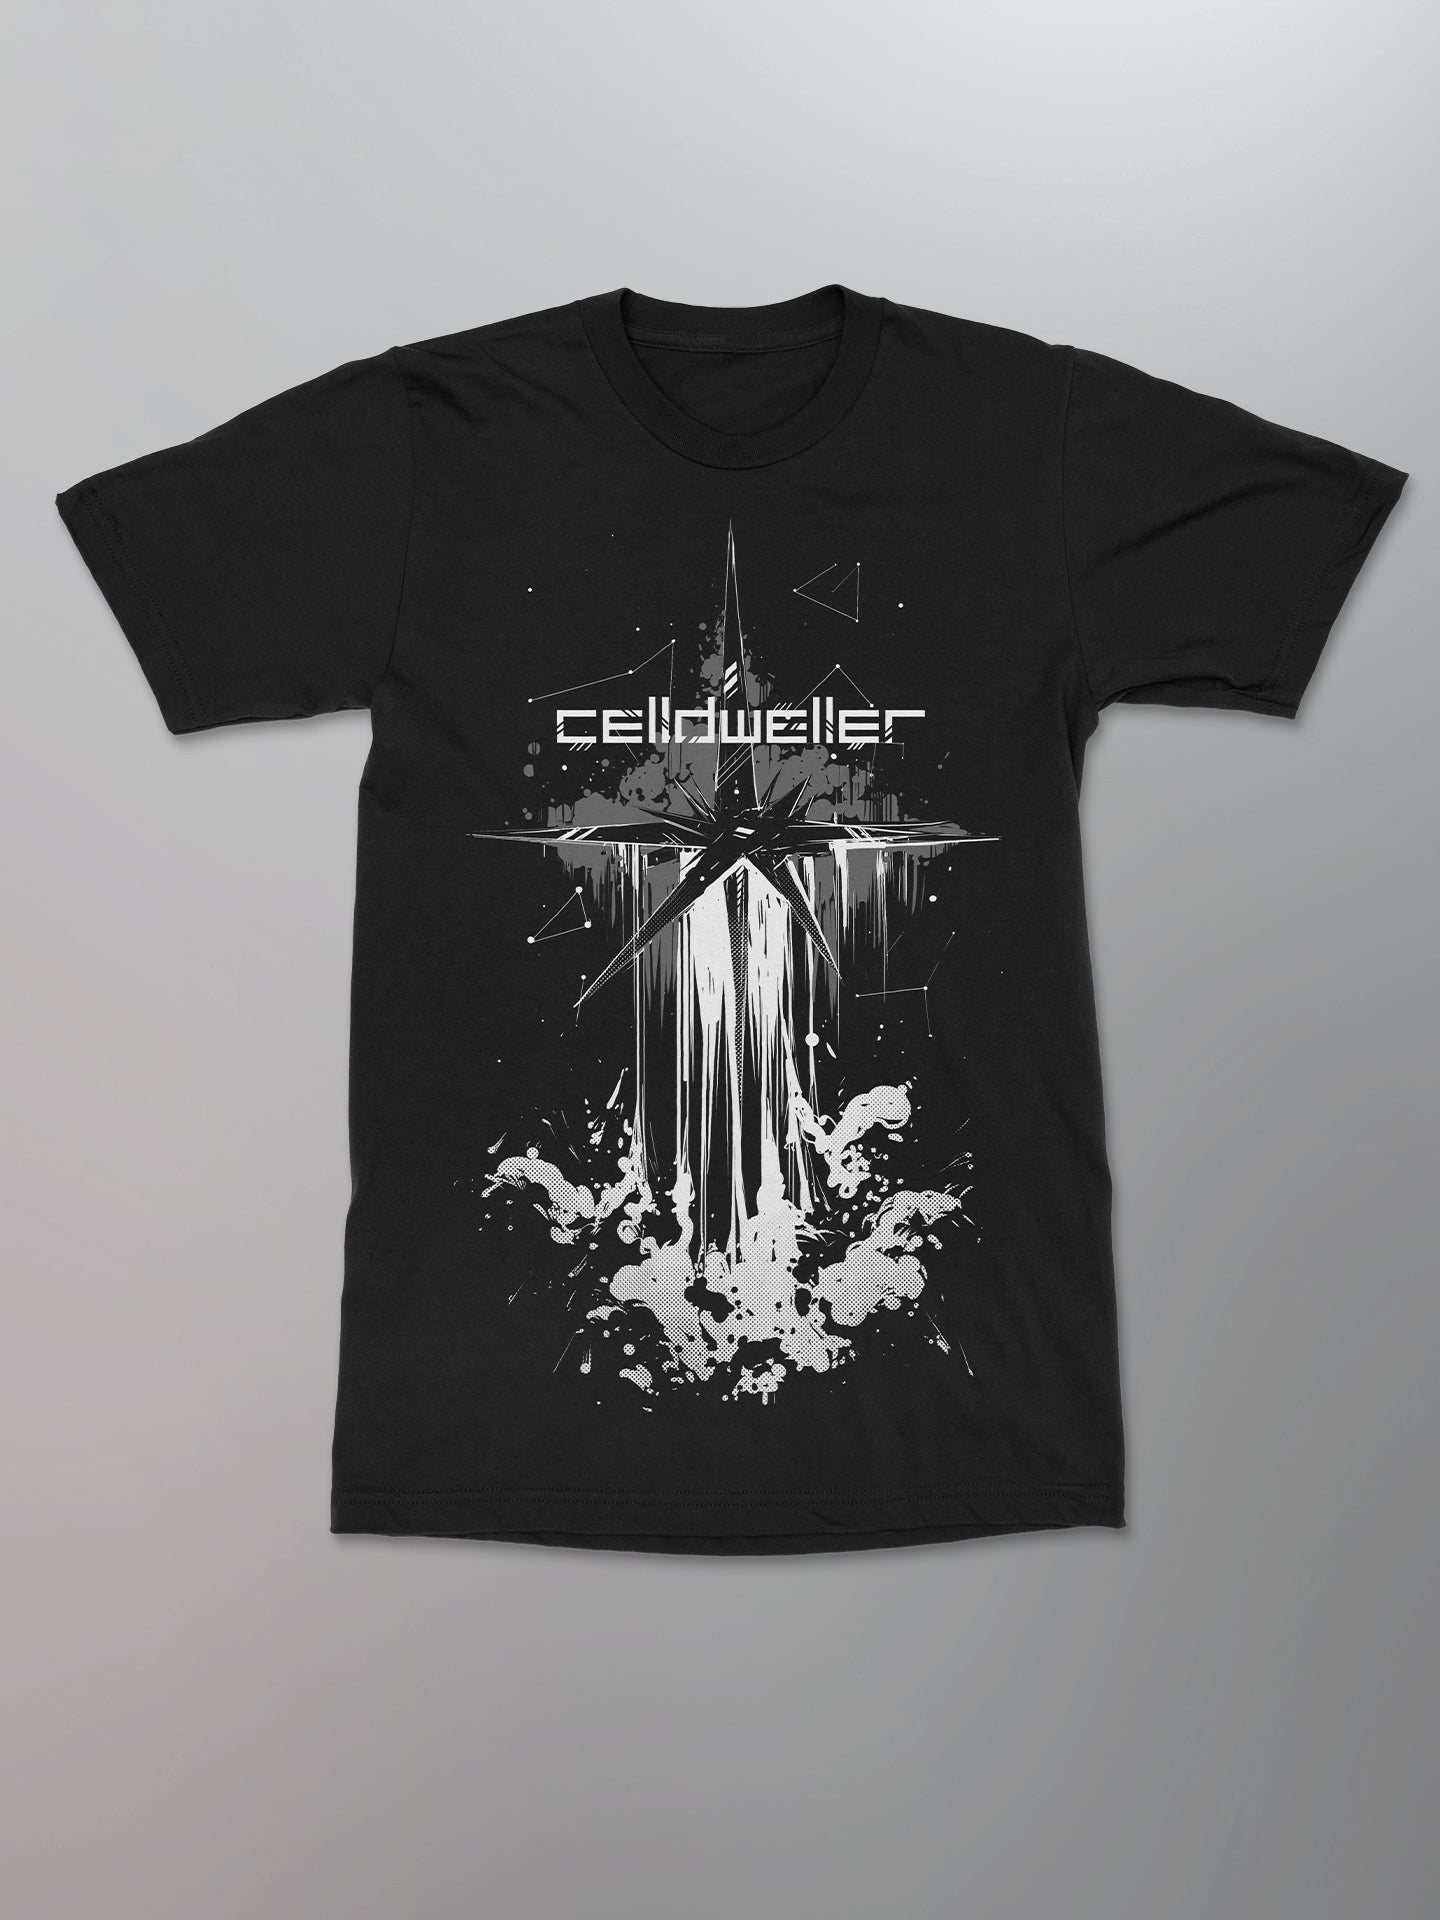 Celldweller - Wish Upon A Blackstar Shirt